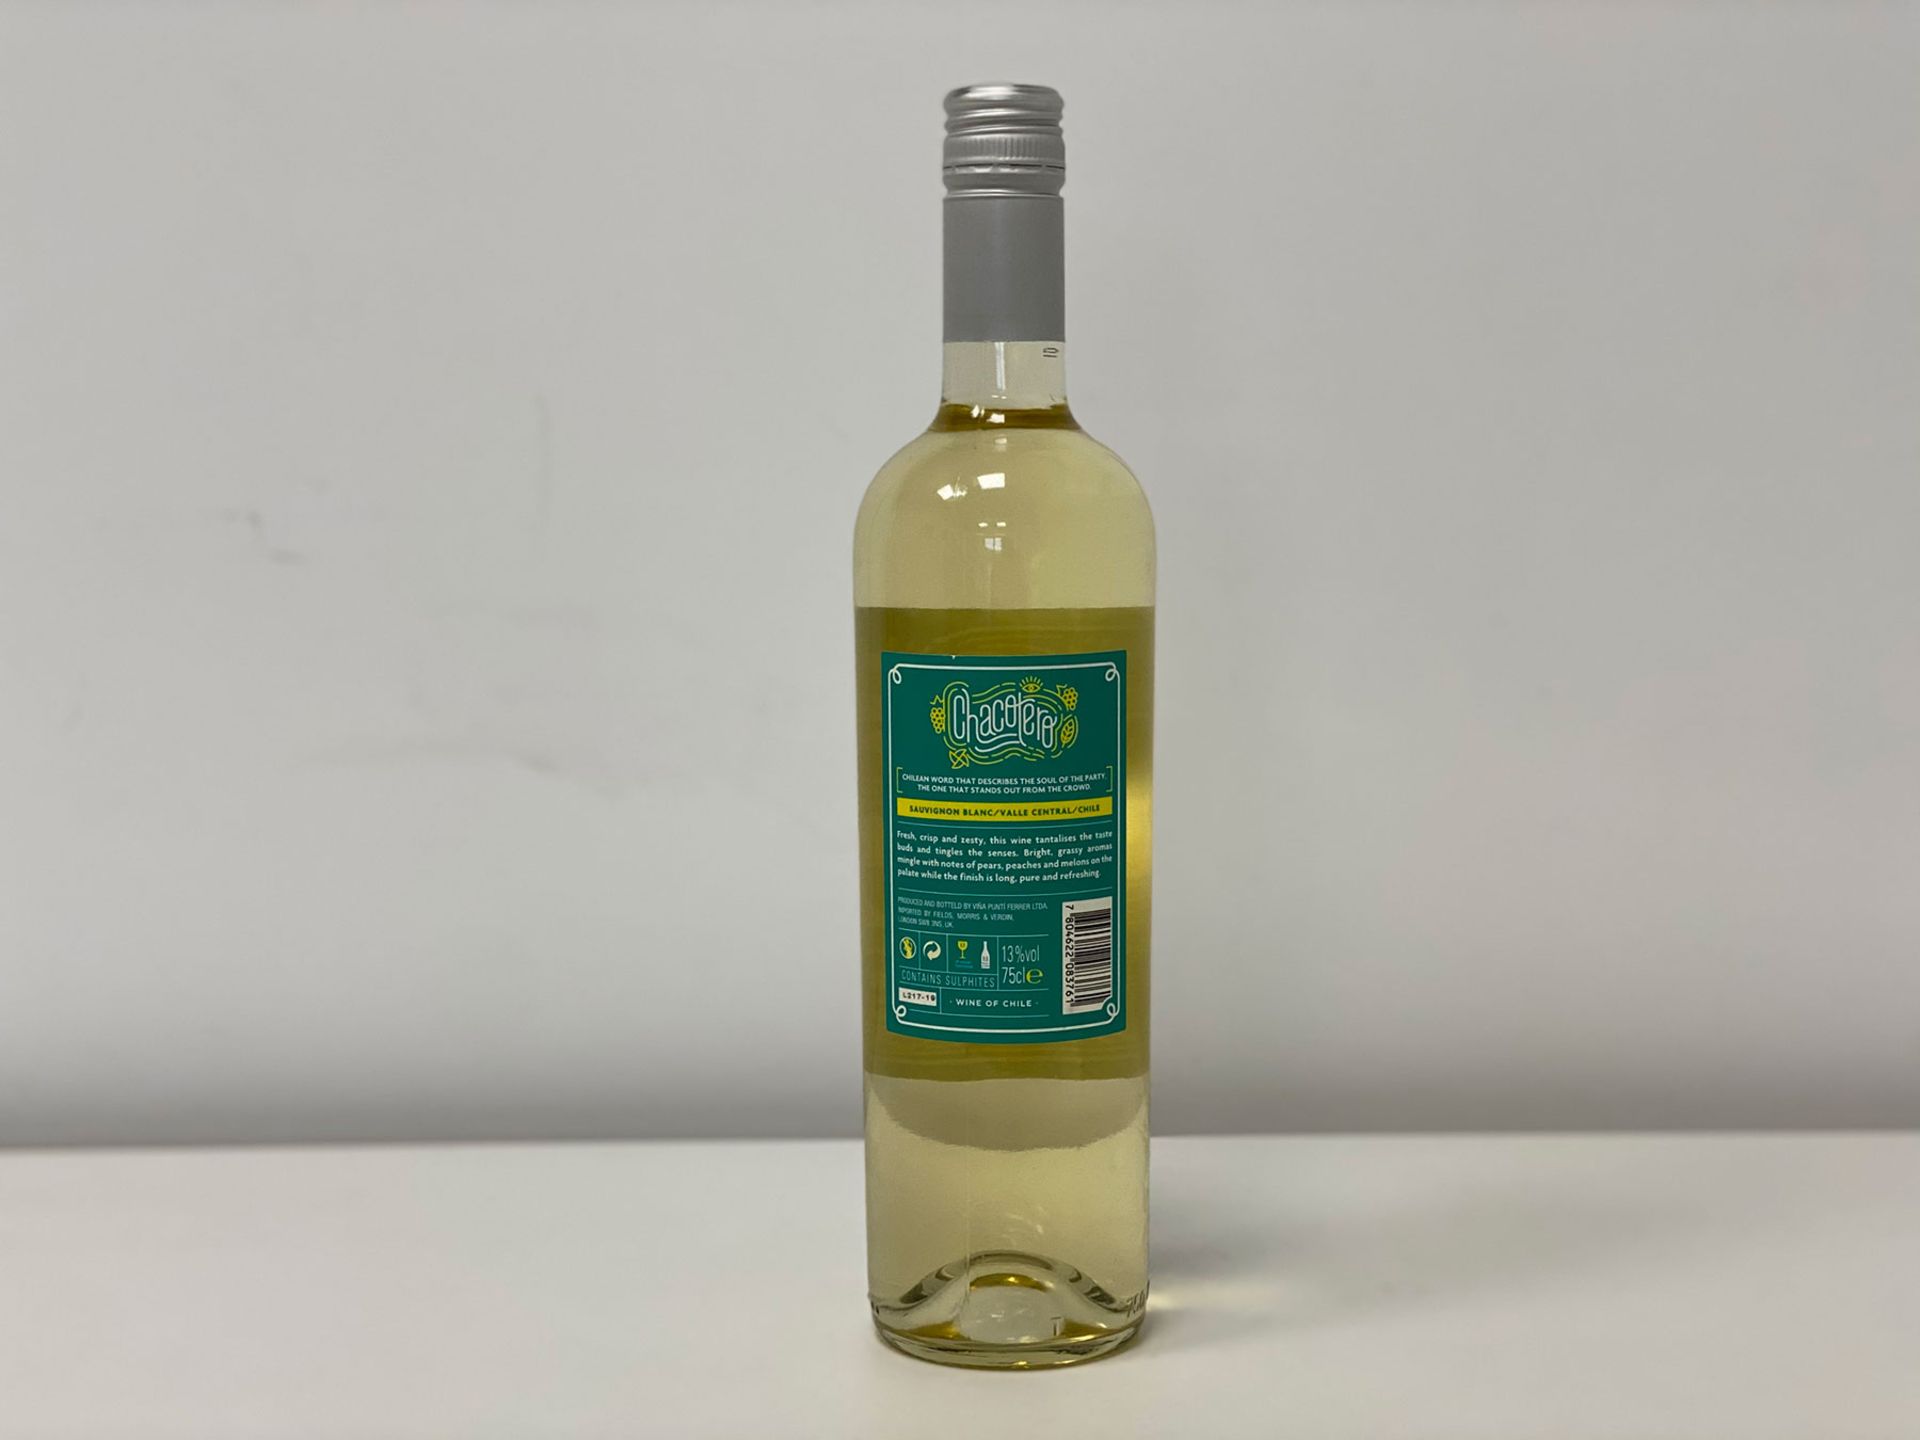 30 Bottles (5 Case) Punti Ferrer - Chacotero Sauvignon Blanc - Central Valley - Image 2 of 2